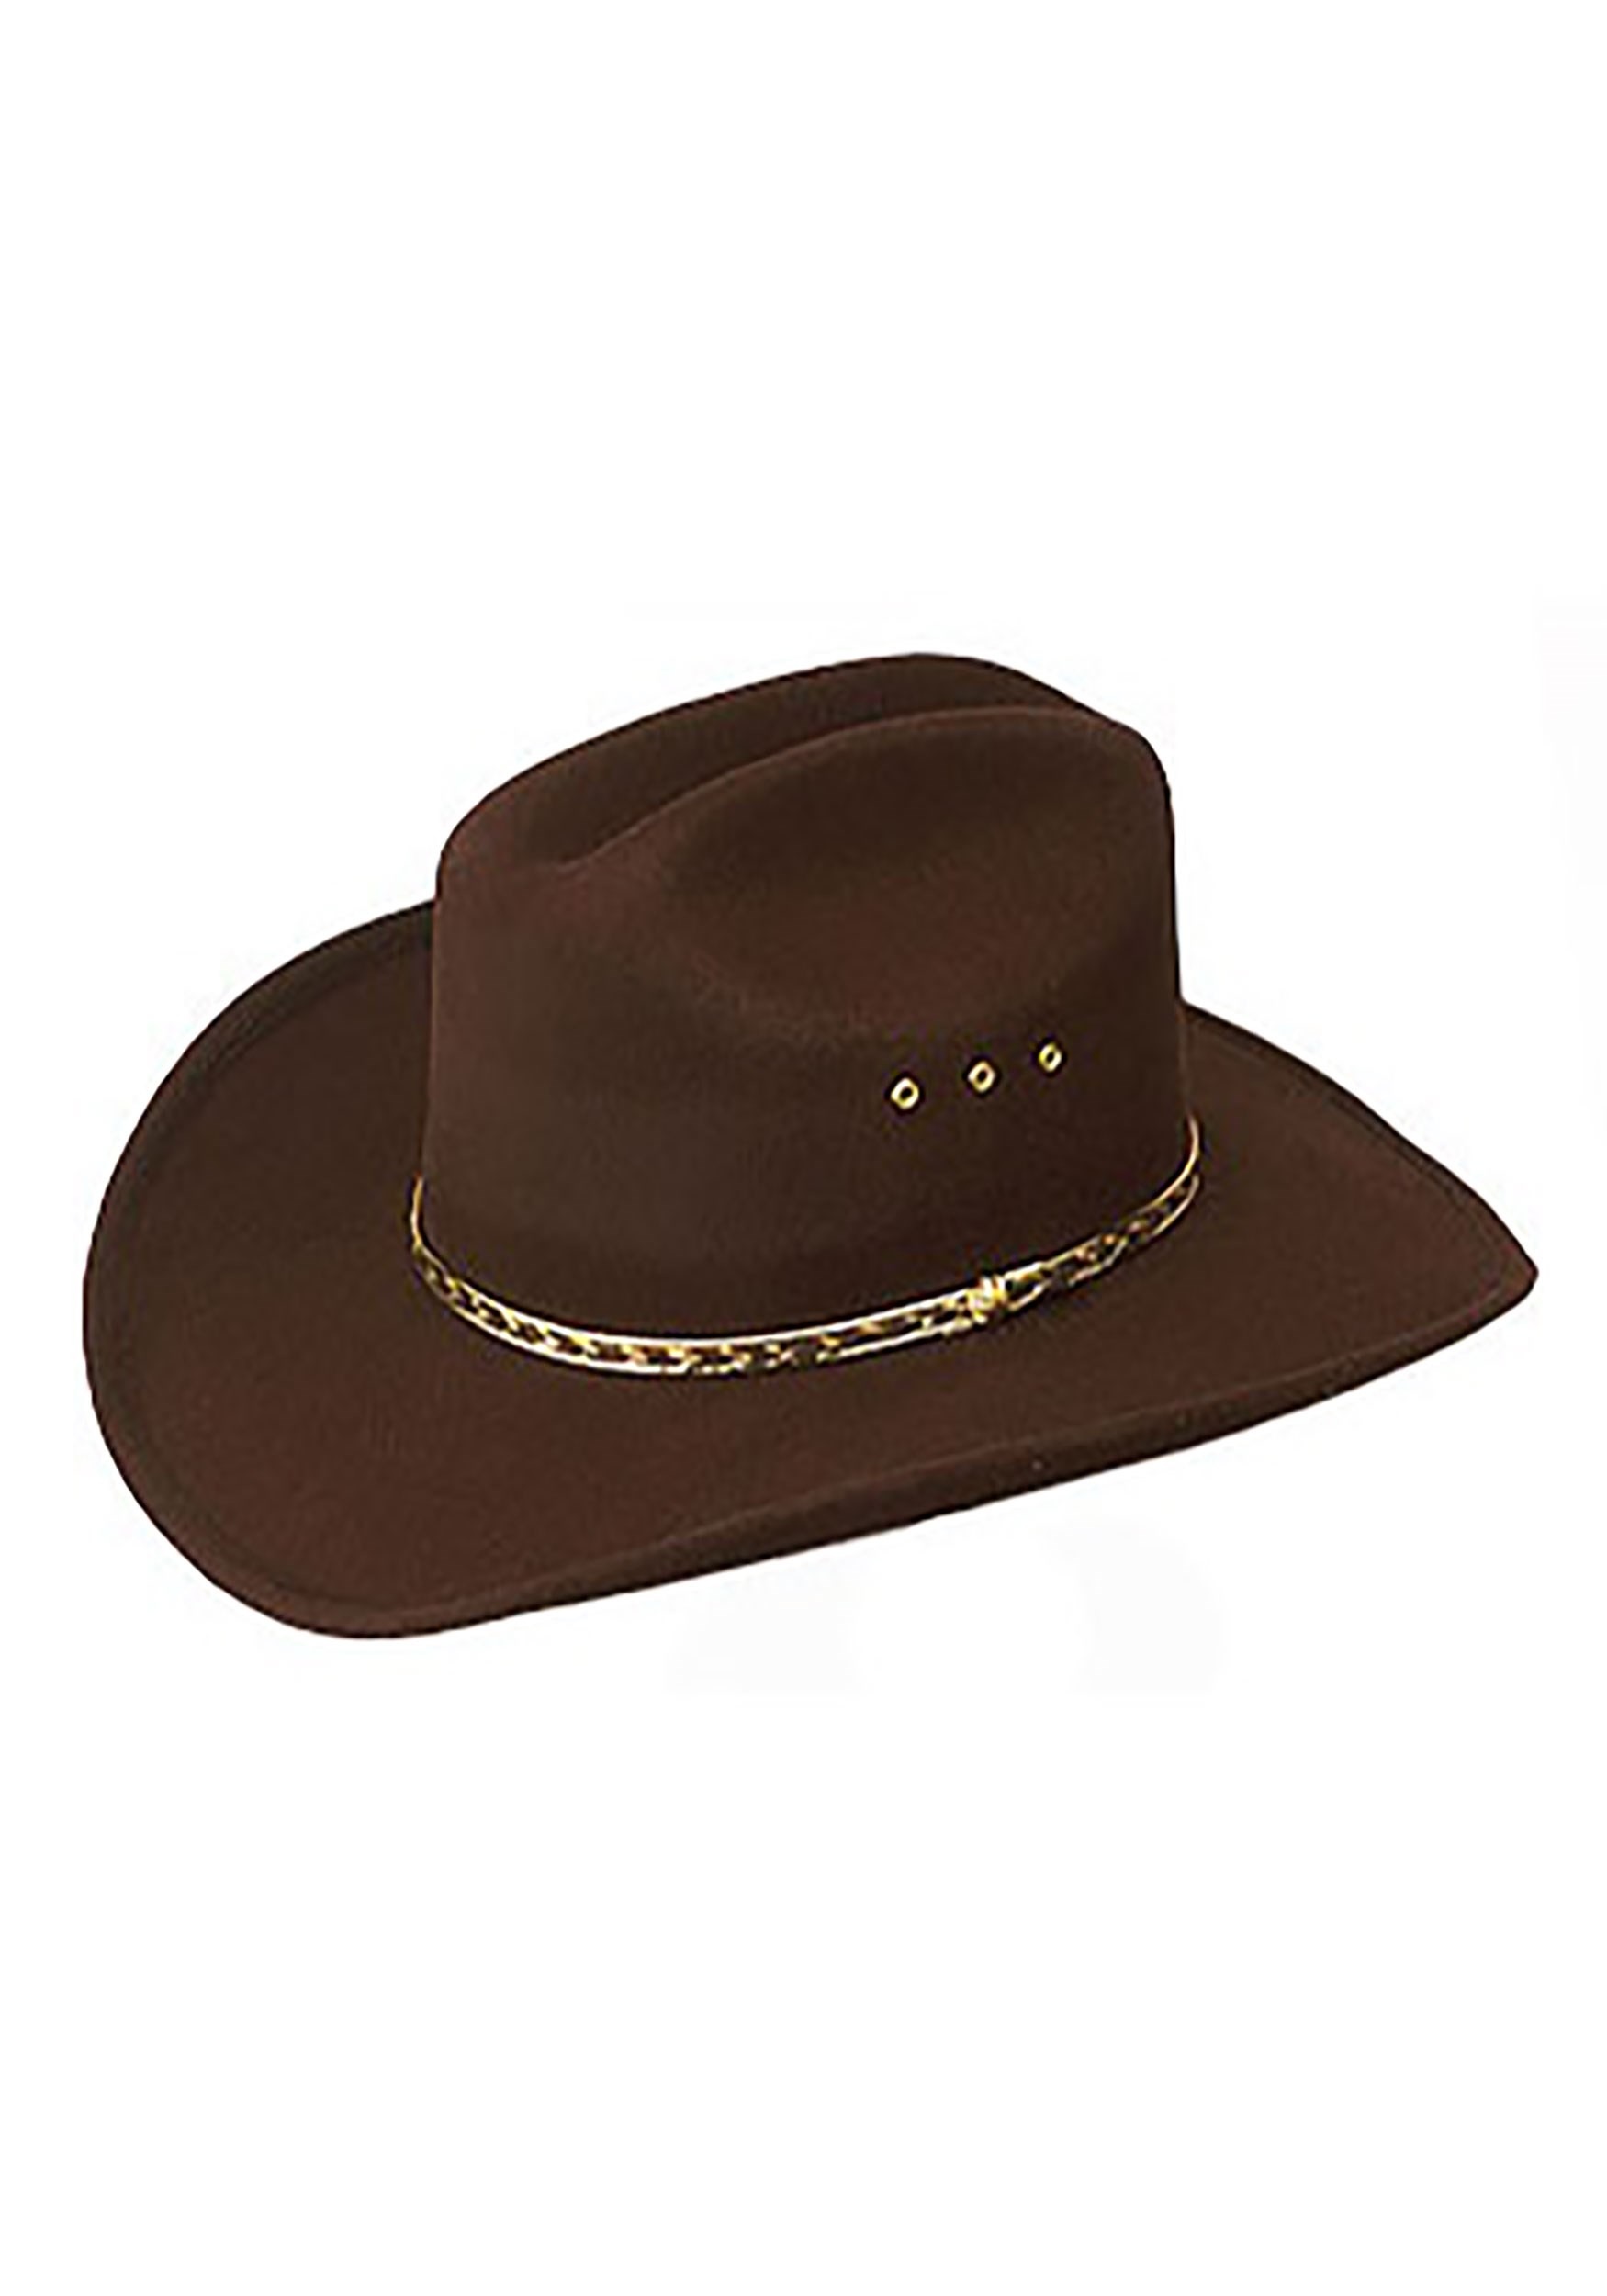 Outlaw Western Brown Cowboy Hat